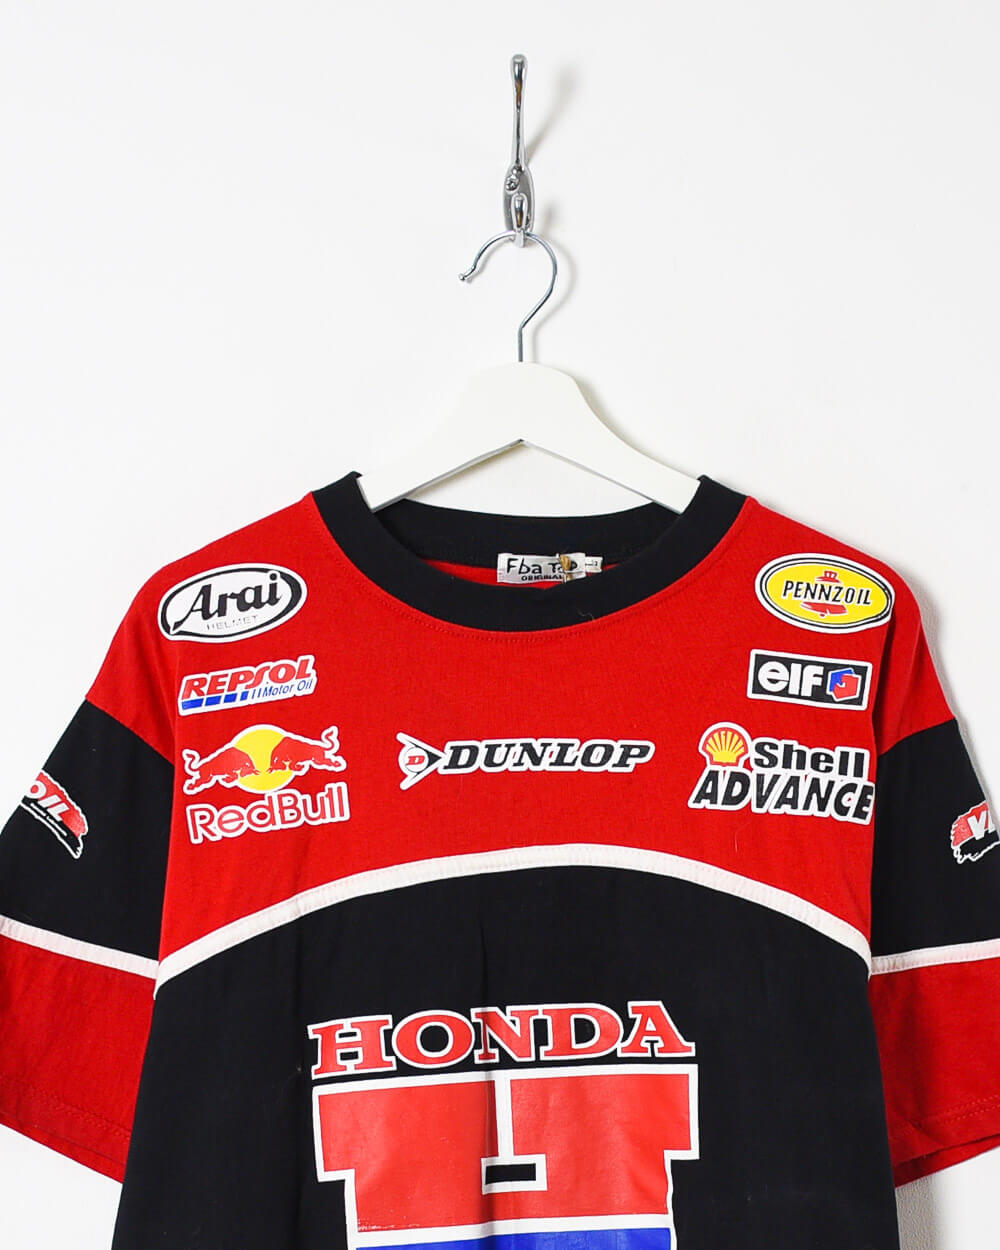 Black Honda Motor Bike Racing Team T-Shirt - Medium